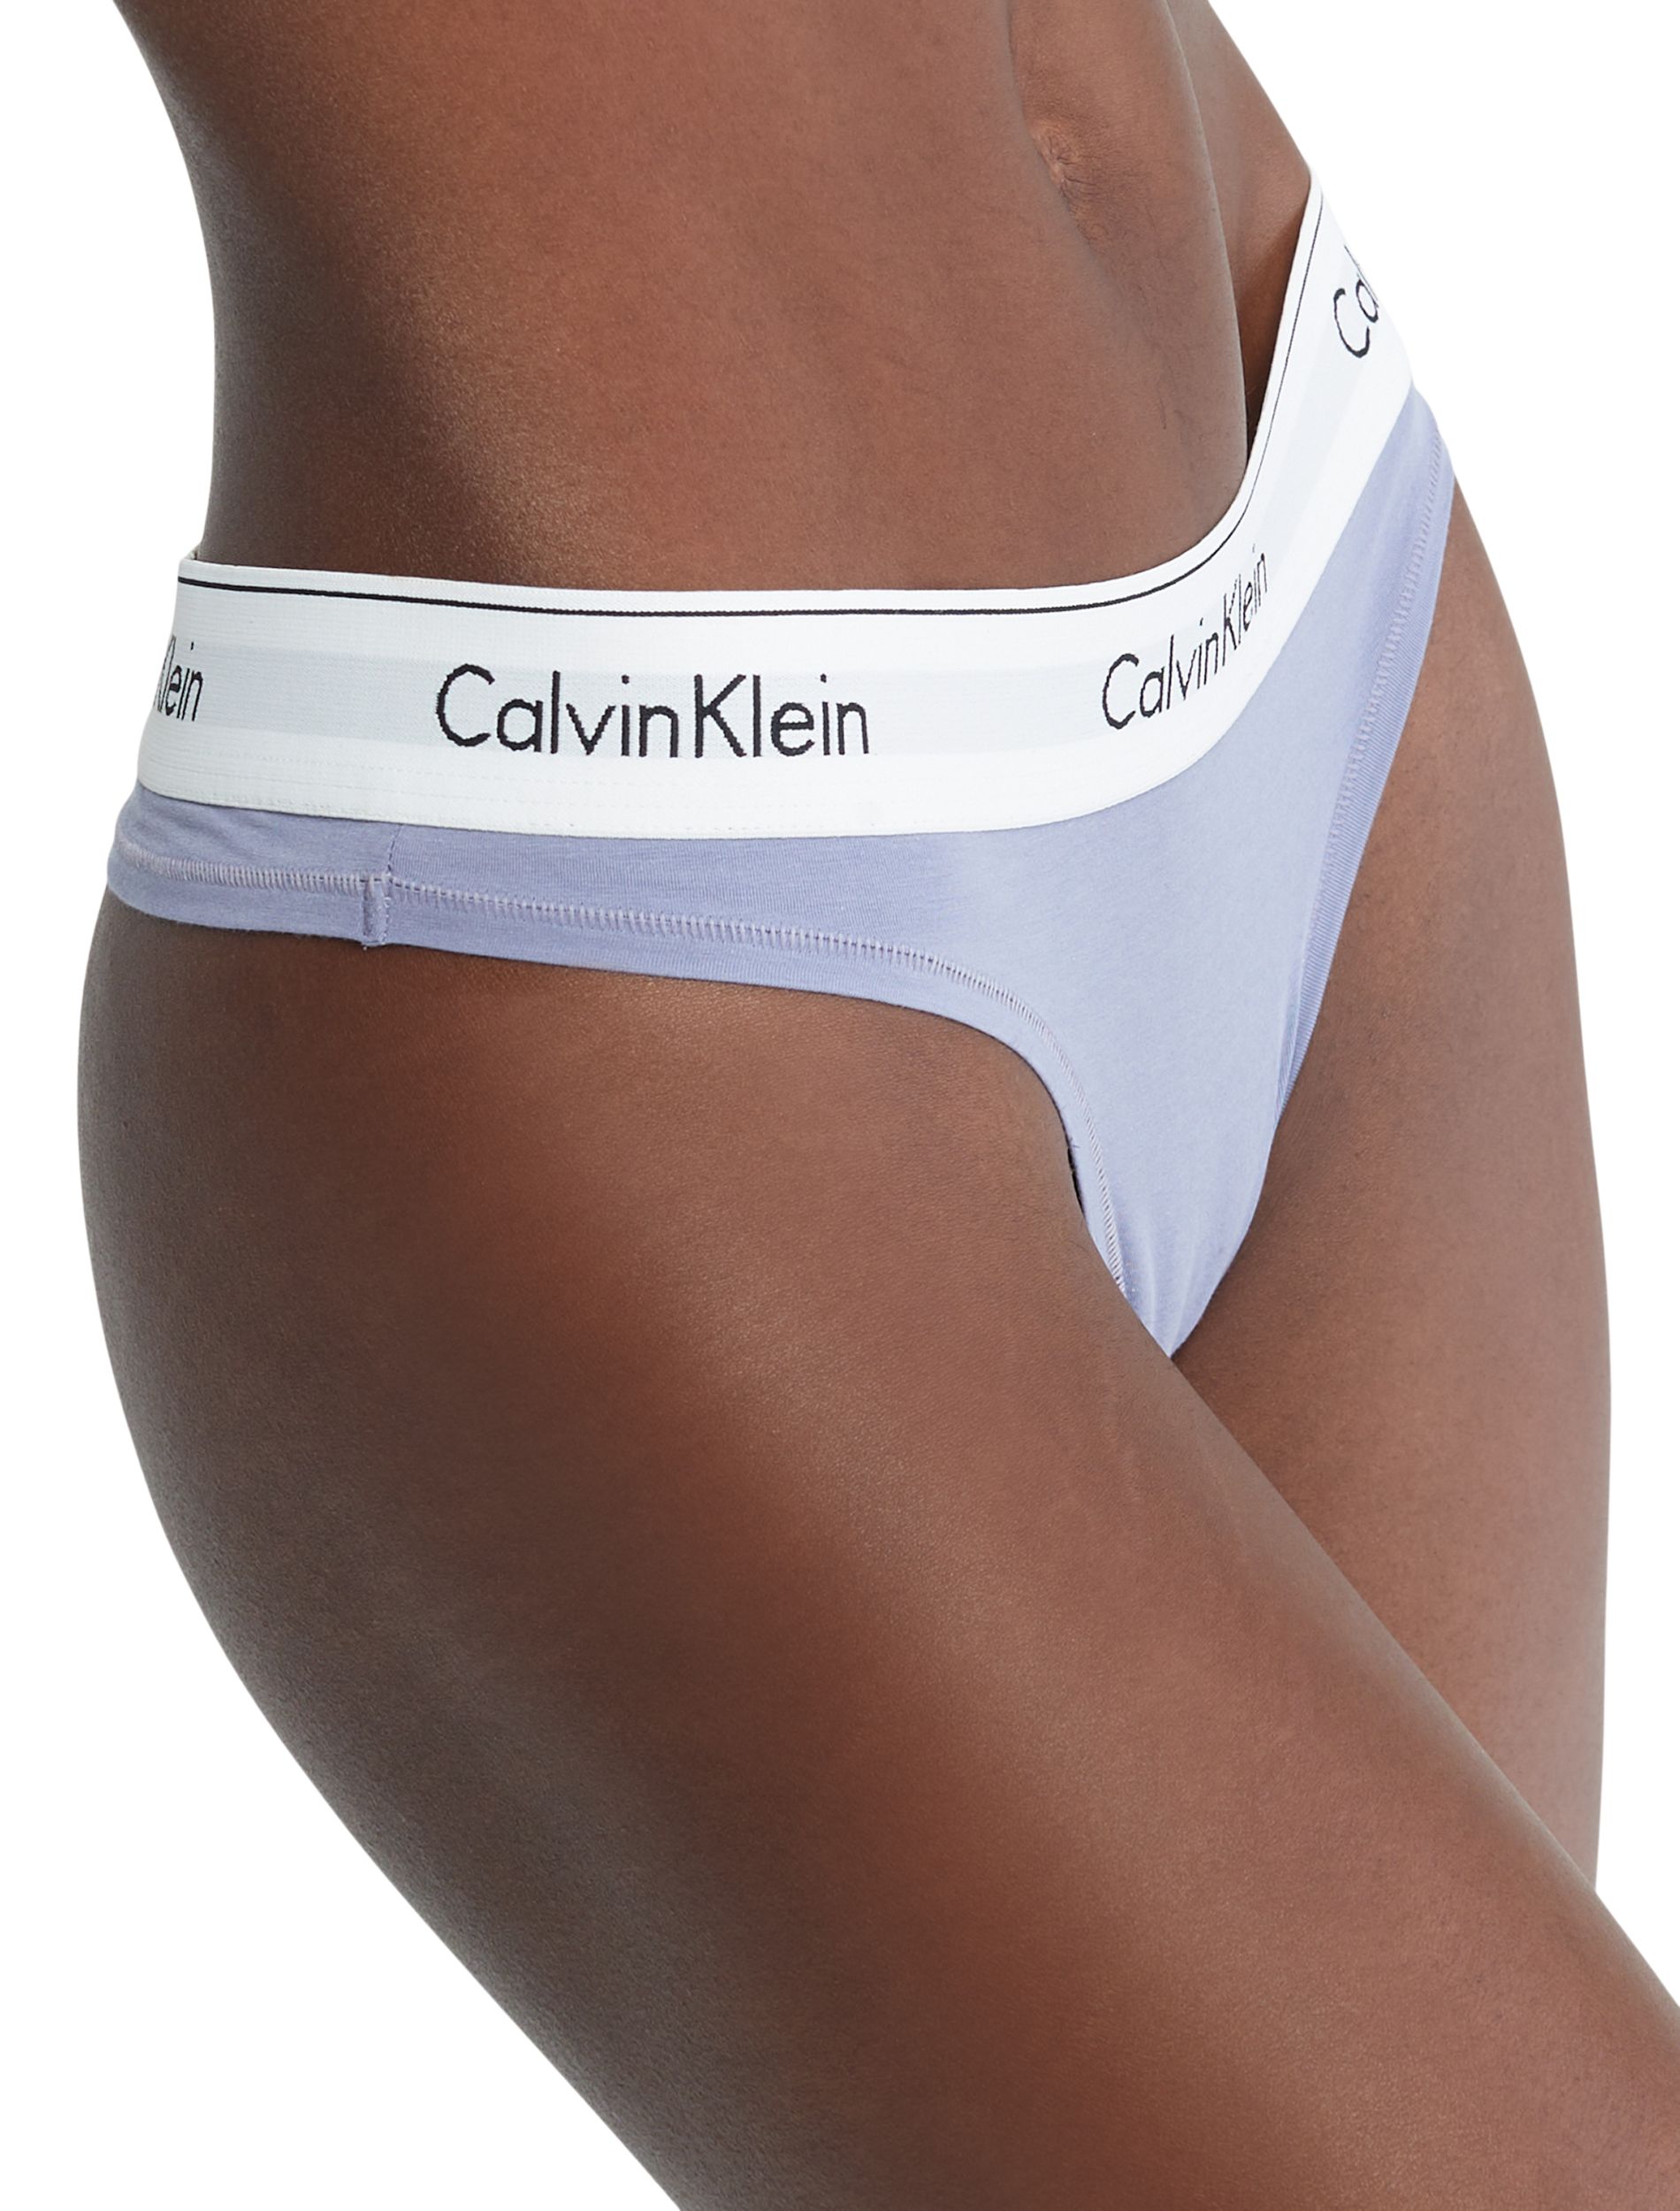 Calvin Klein Women's Modern Cotton Pad Spogry Bralette